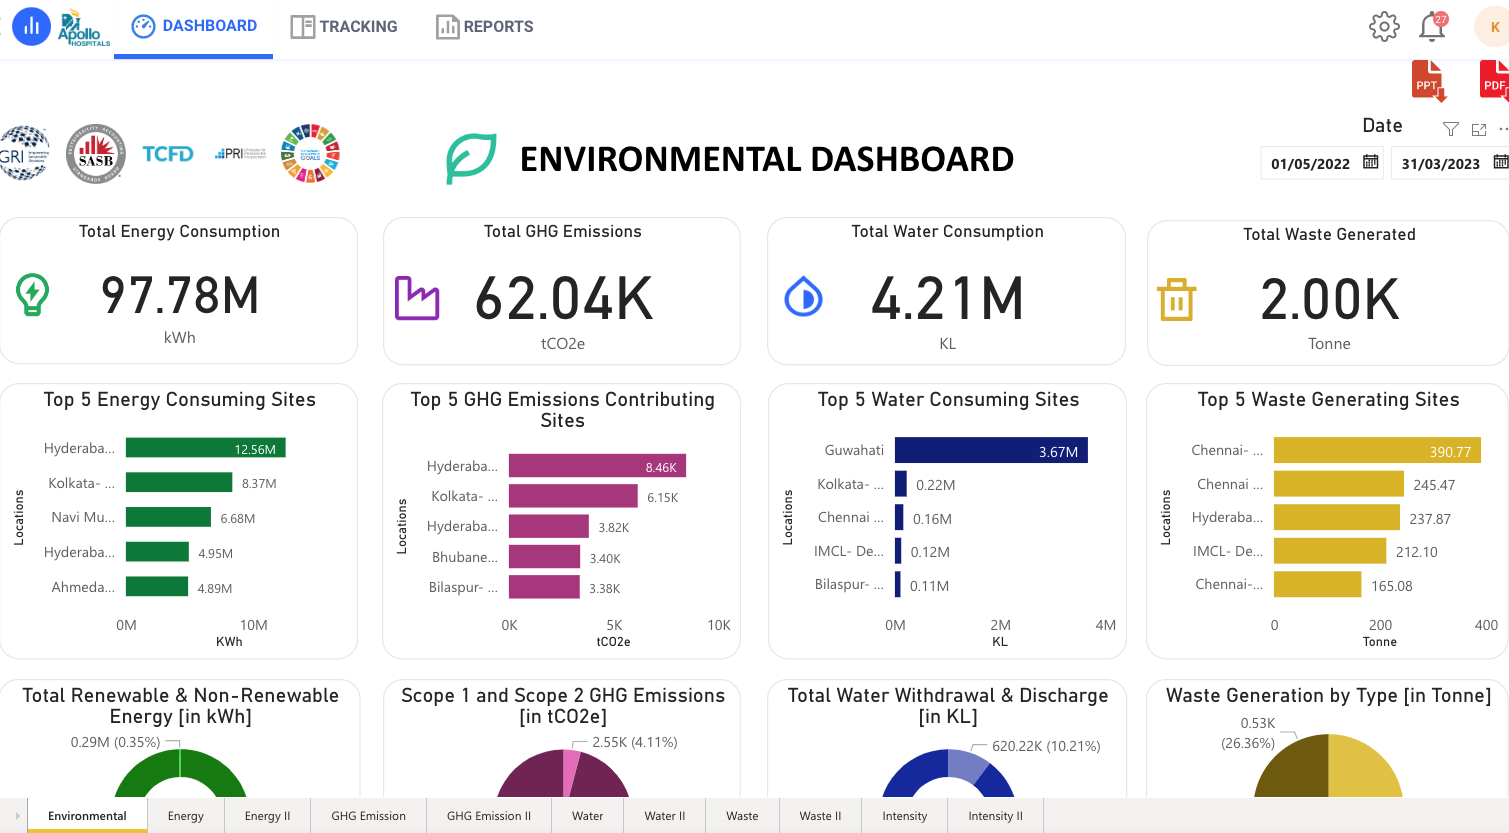 Screenshot of Environmental Dashboard for Apollo Hospitals